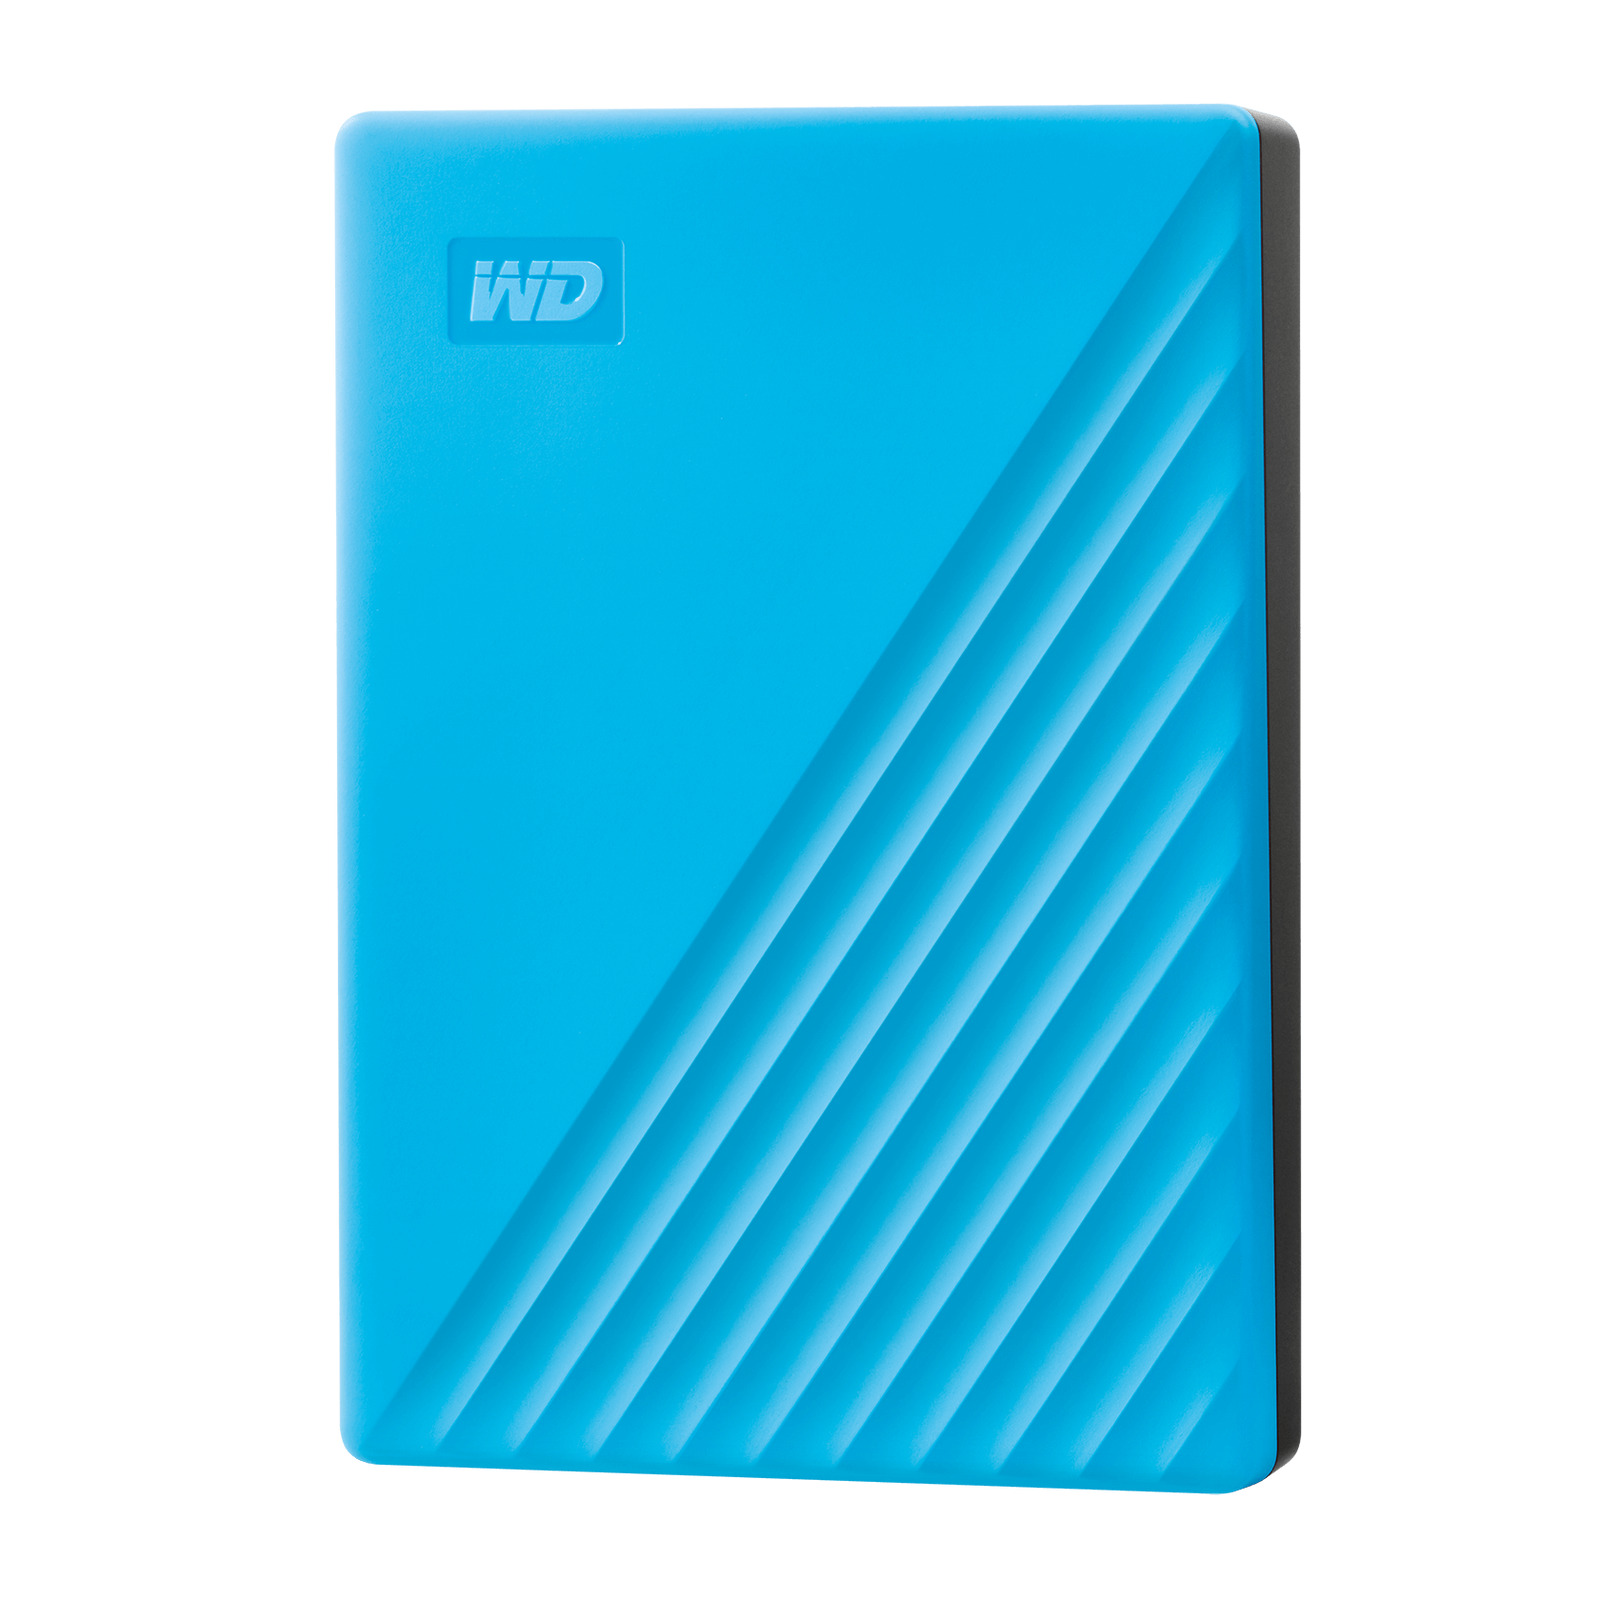 WD 4TB My Passport, Portable External Hard Drive, Blue - WDBPKJ0040BBL-WESN